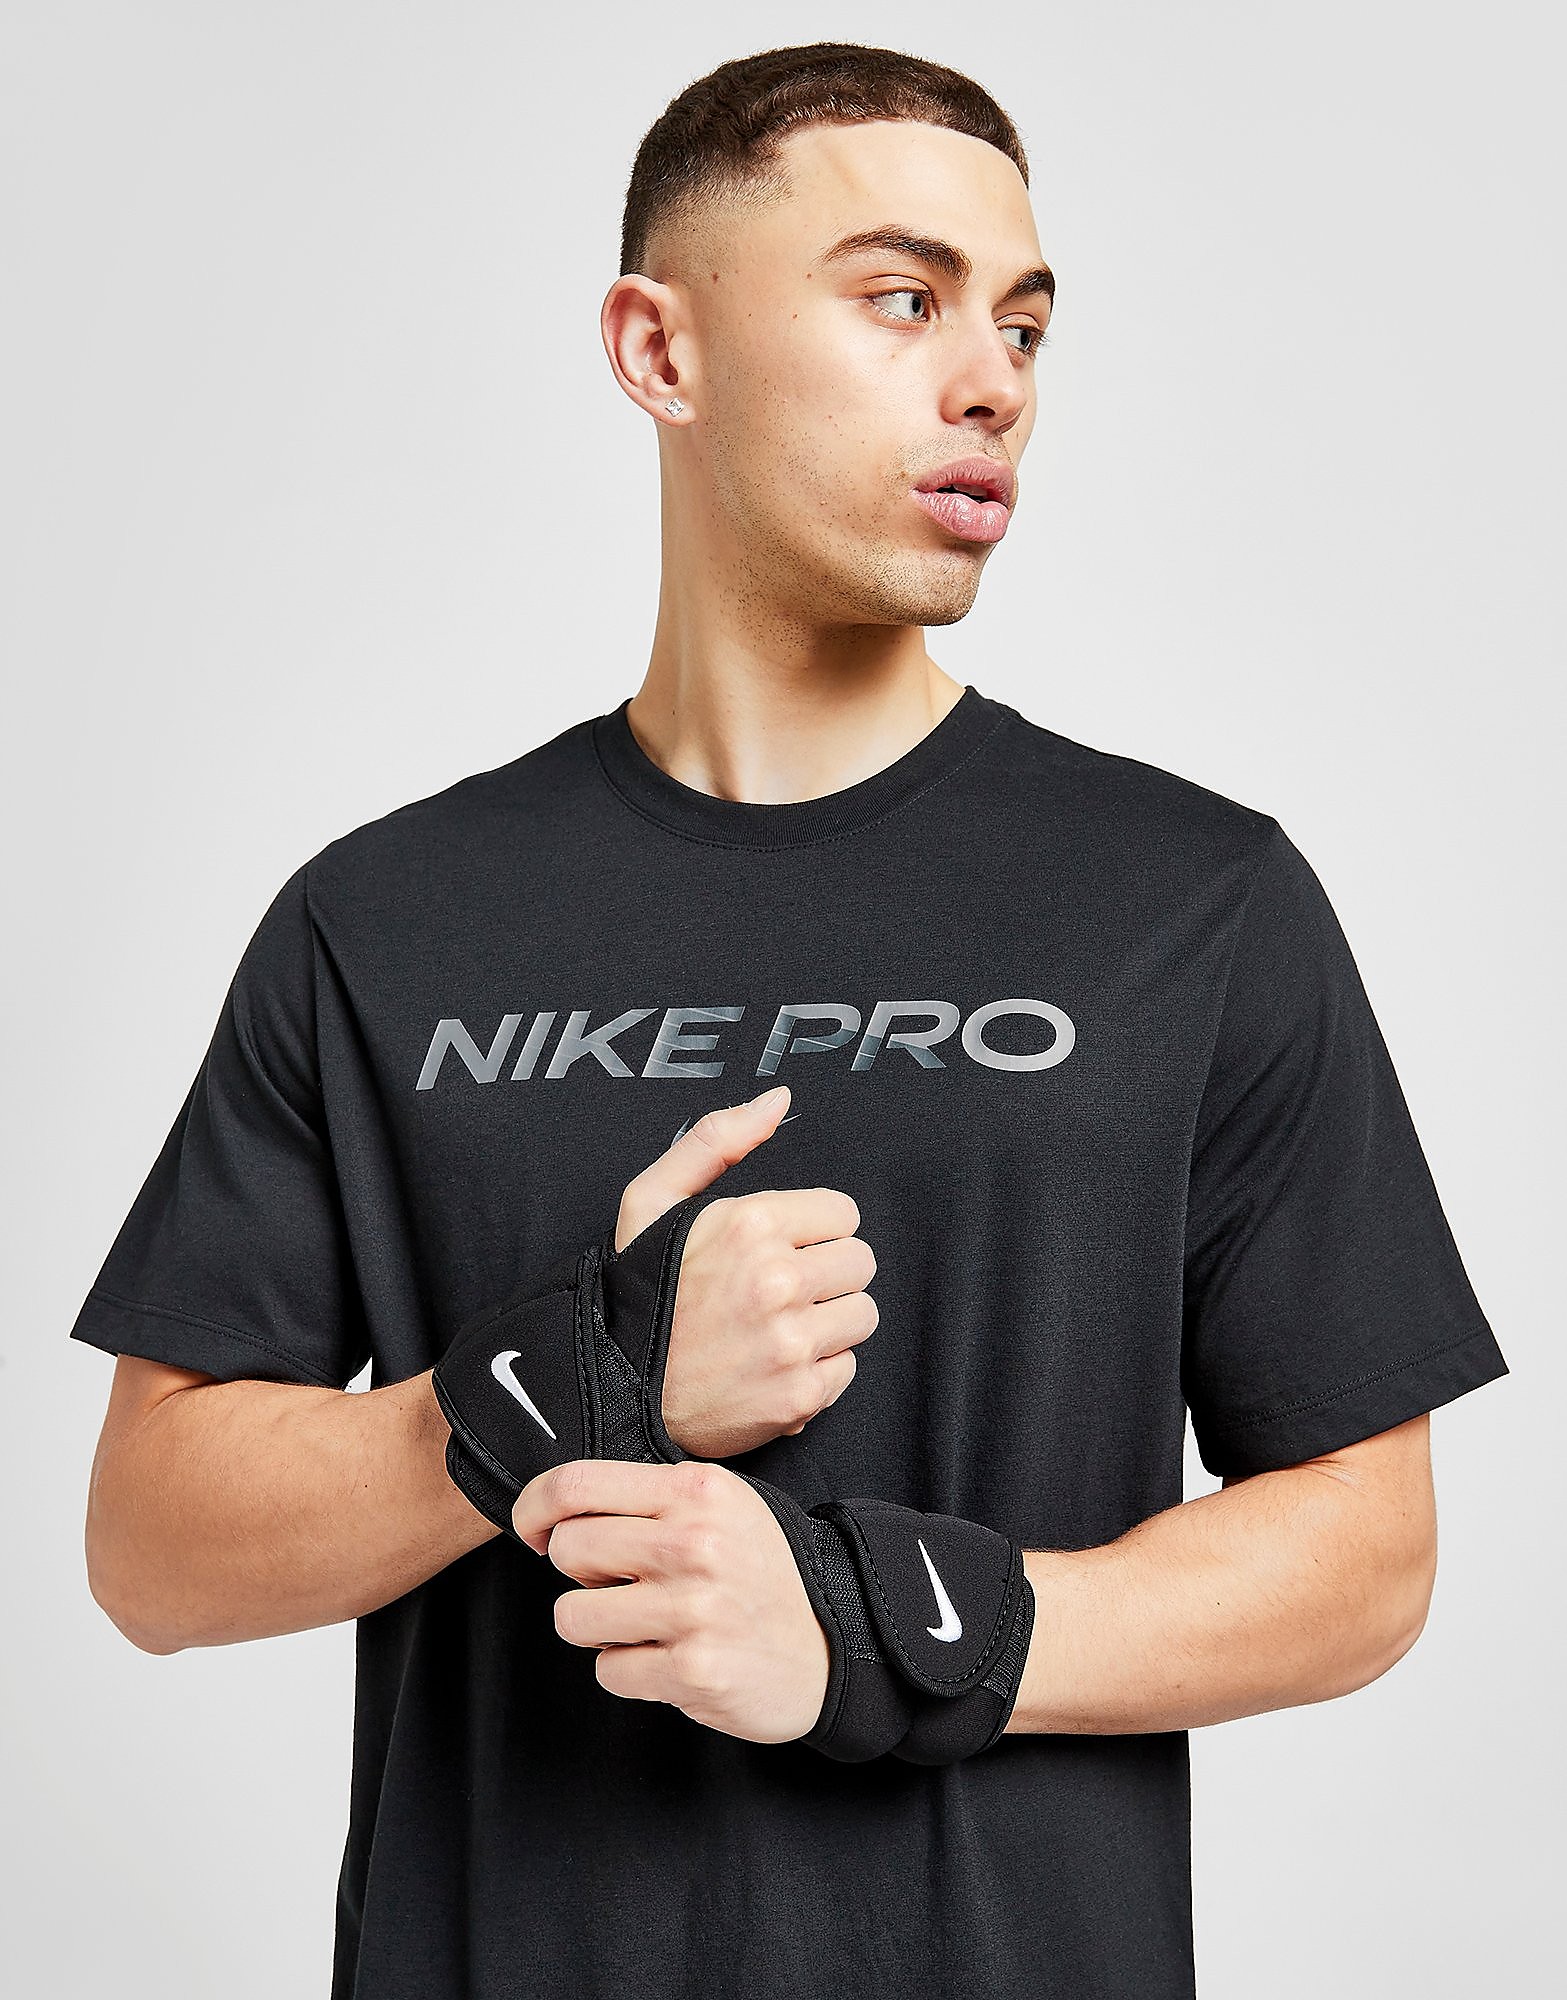 Nike wrist weights - mens, musta, nike